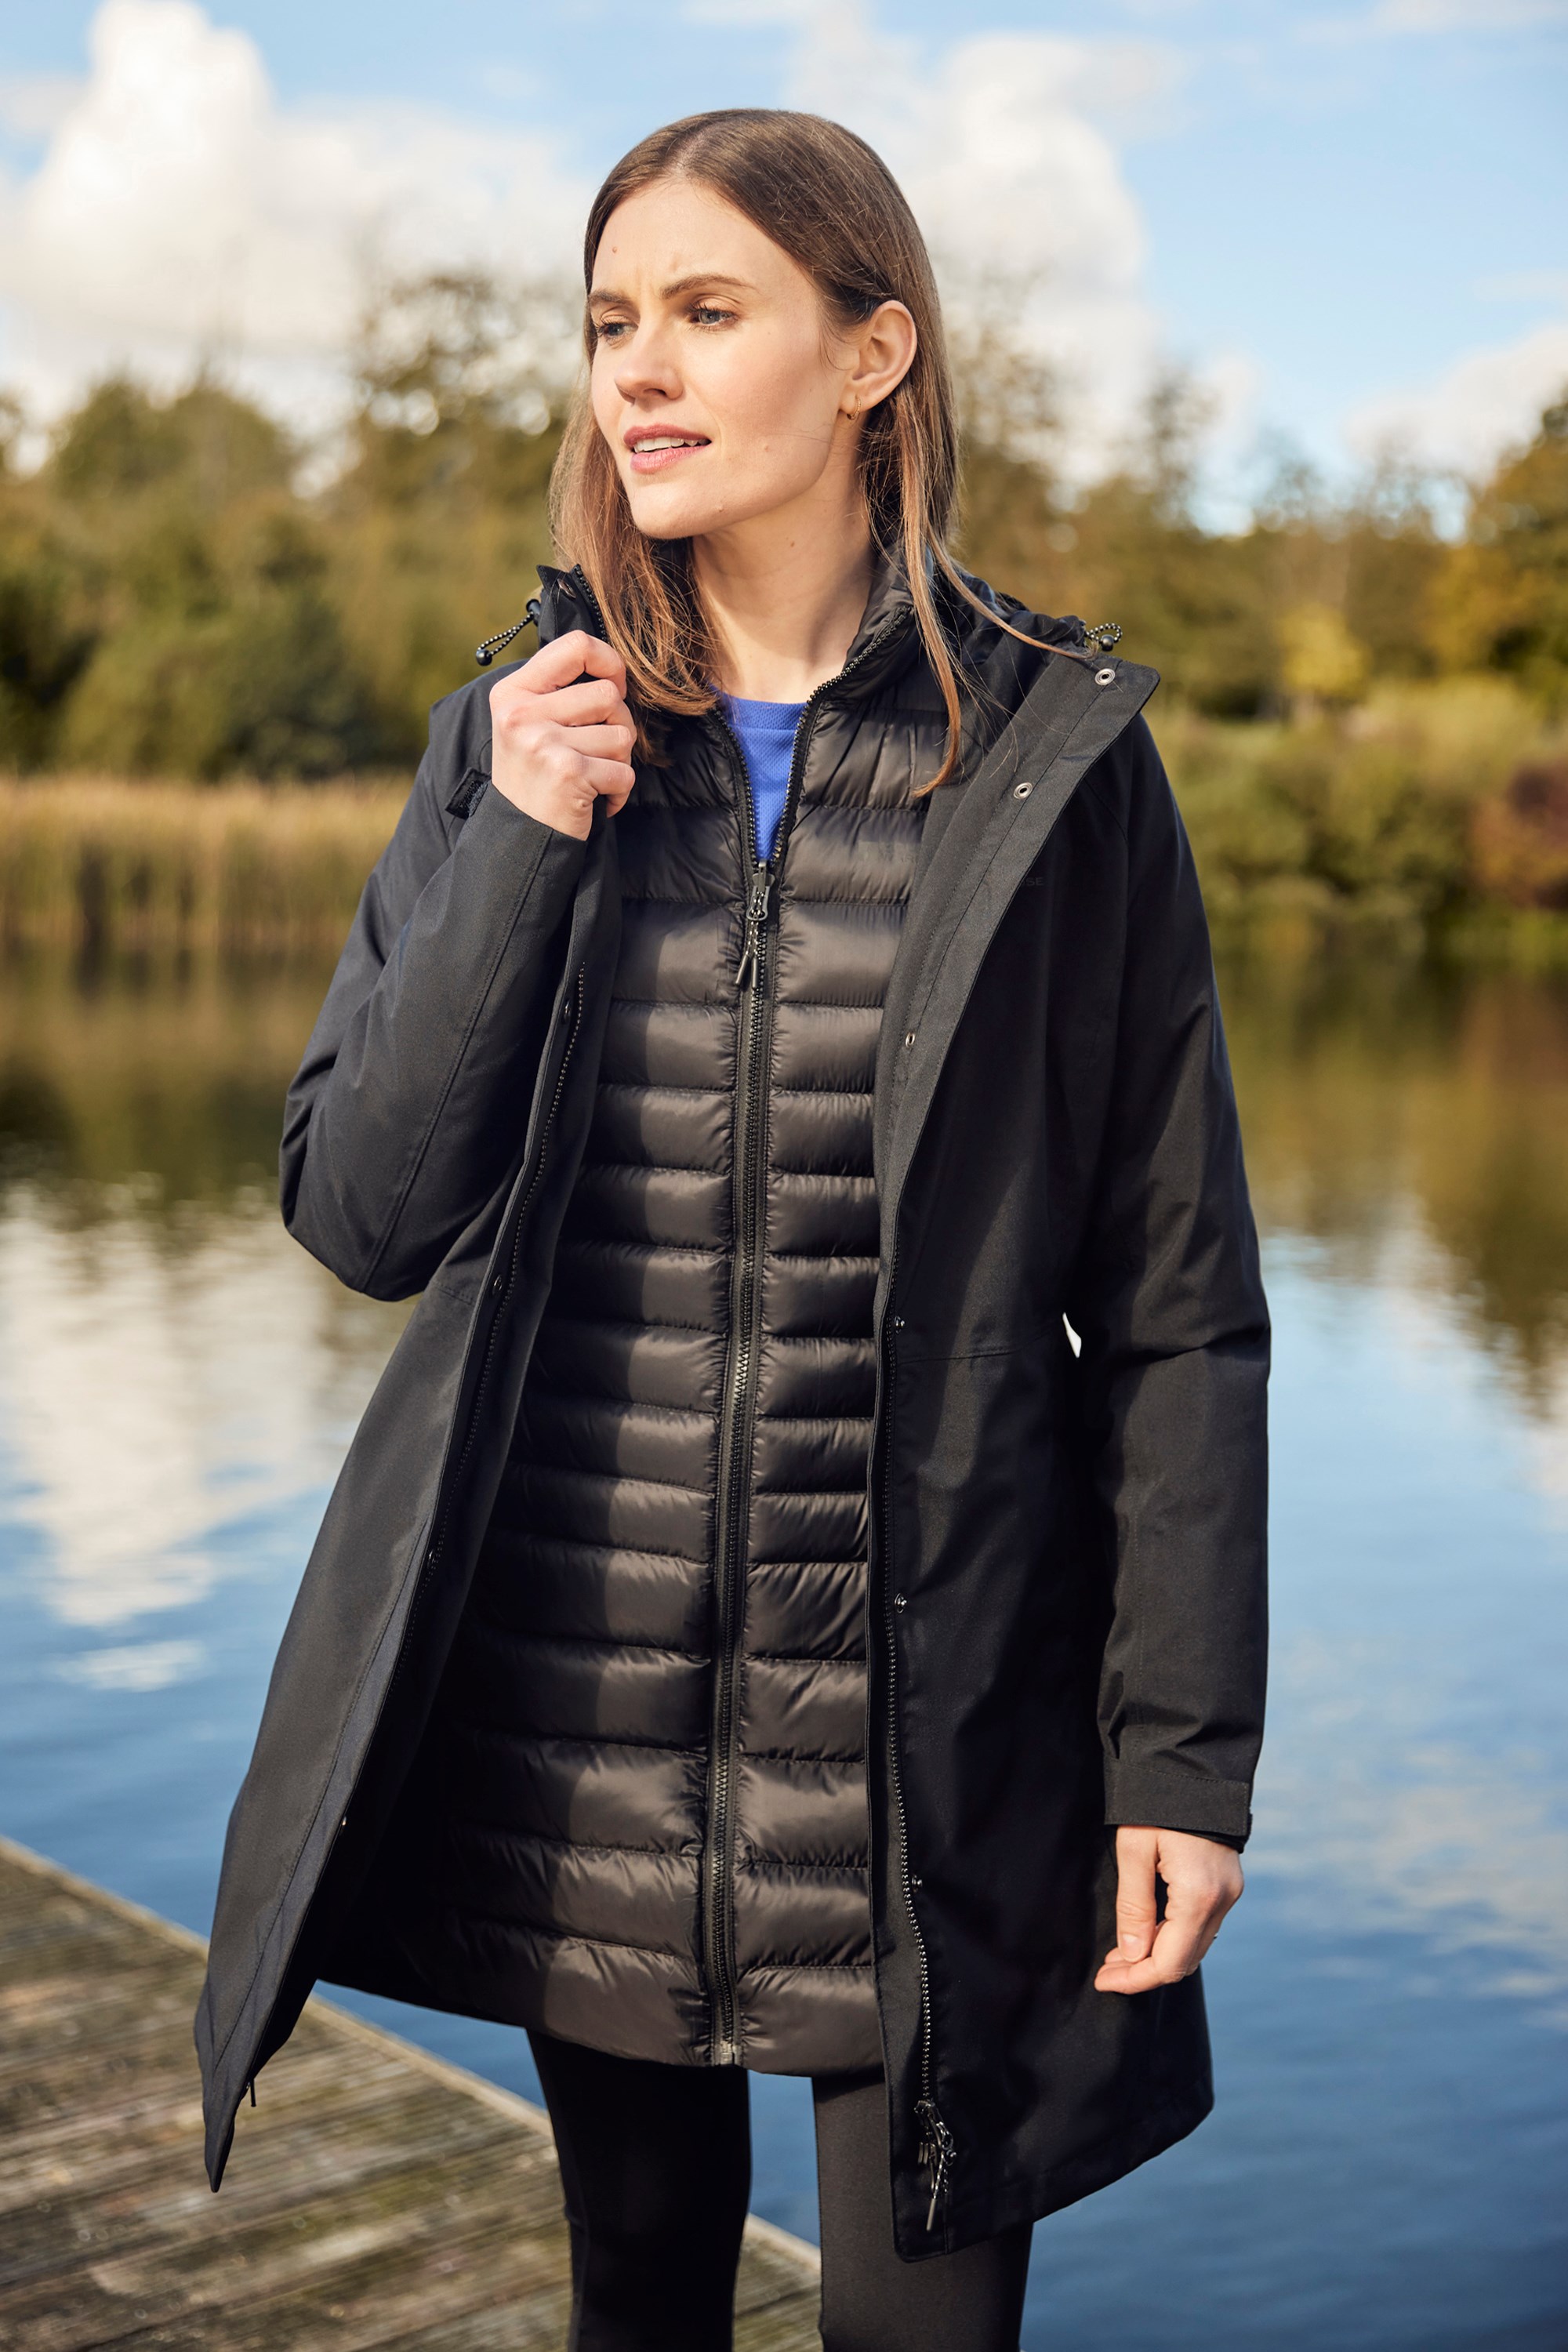 mens-waterproof-3-in-1-hiking-jacket-inner-fleece-jacket-size-chart -  Winter Clothes